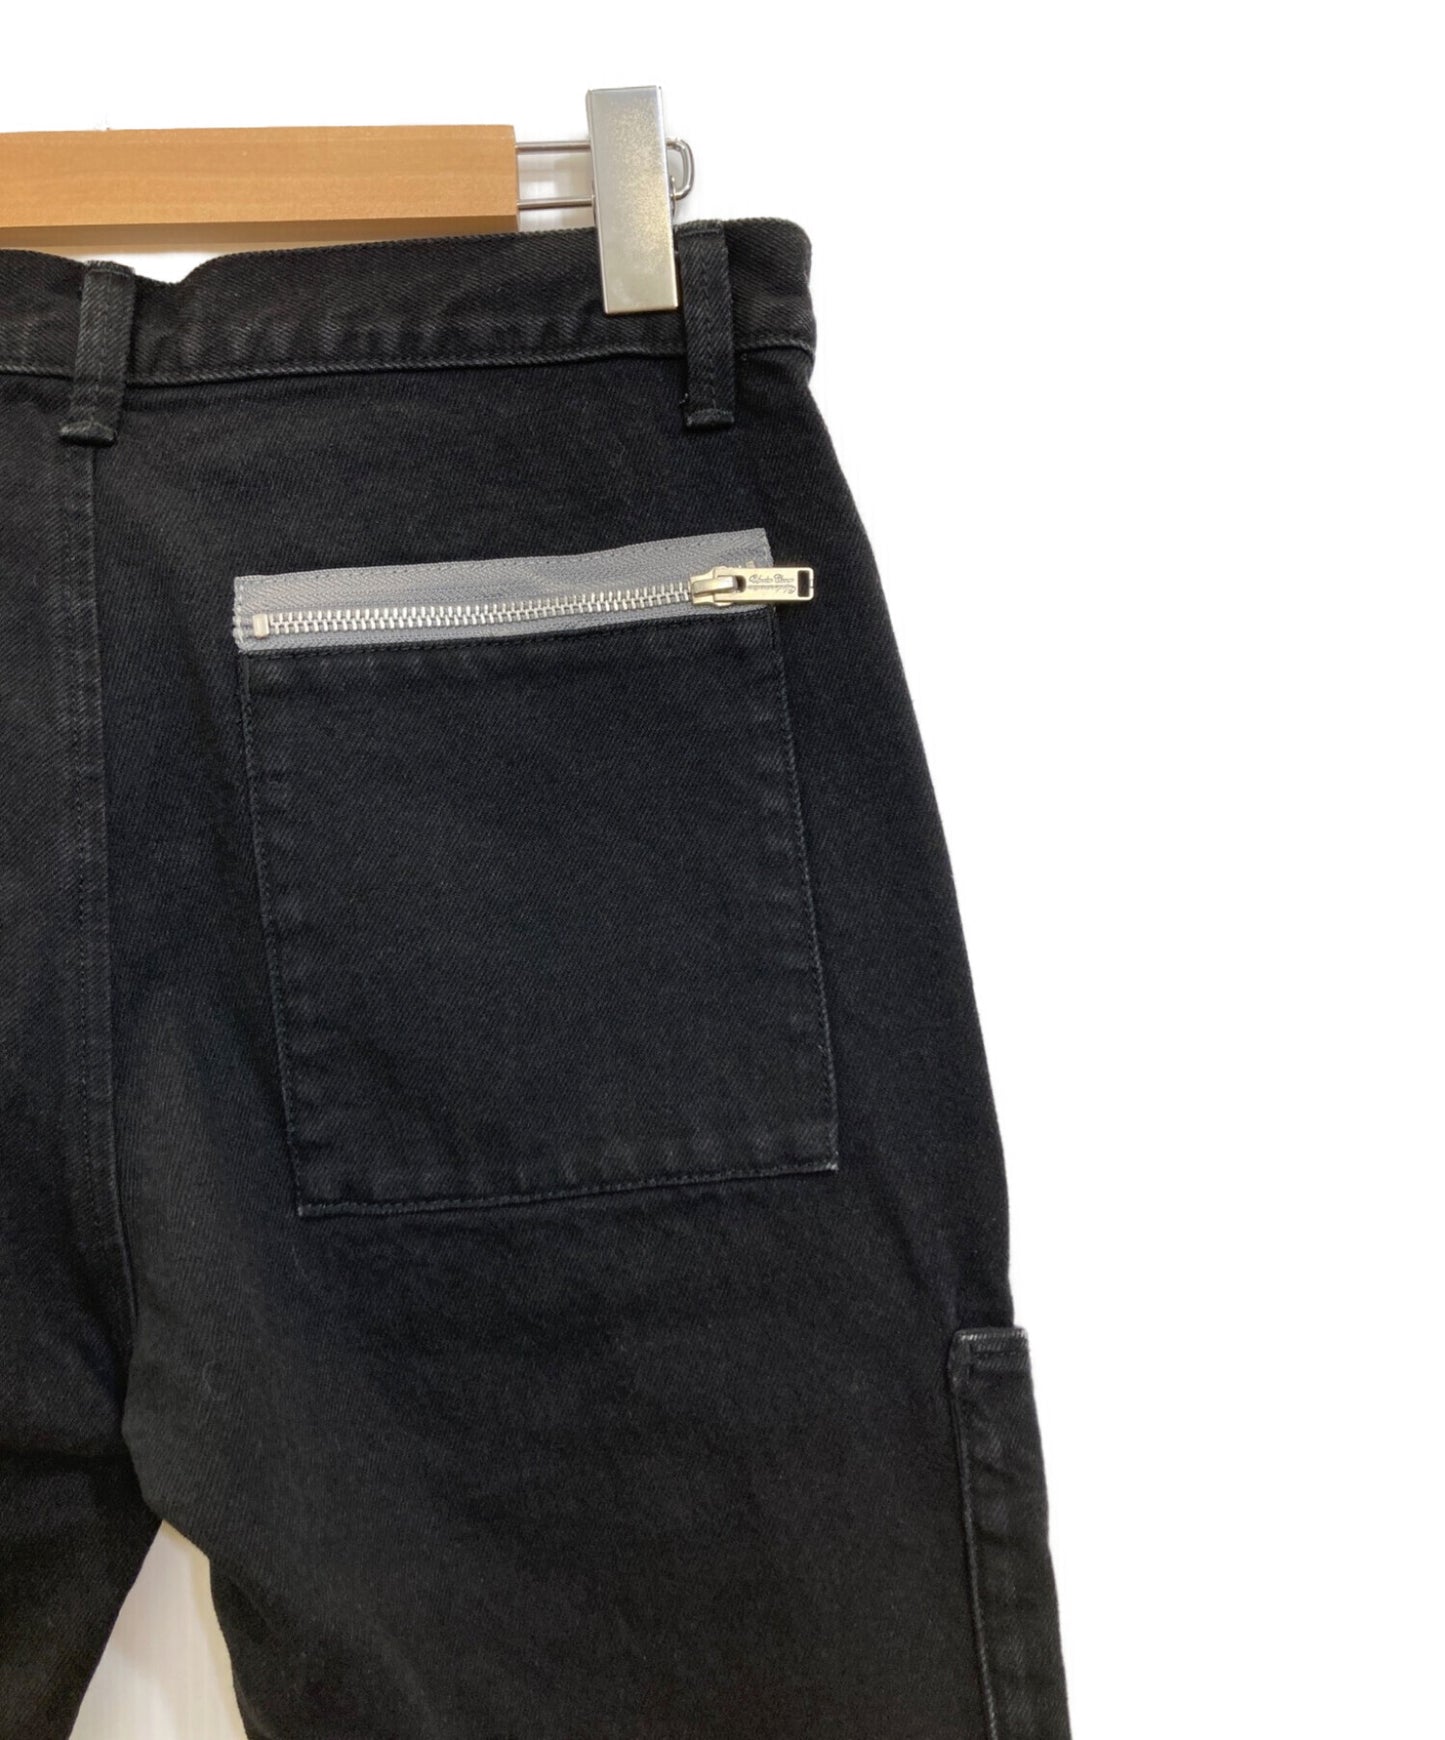 卧底Katsuragi口袋Slim裤子UC2B4505-2